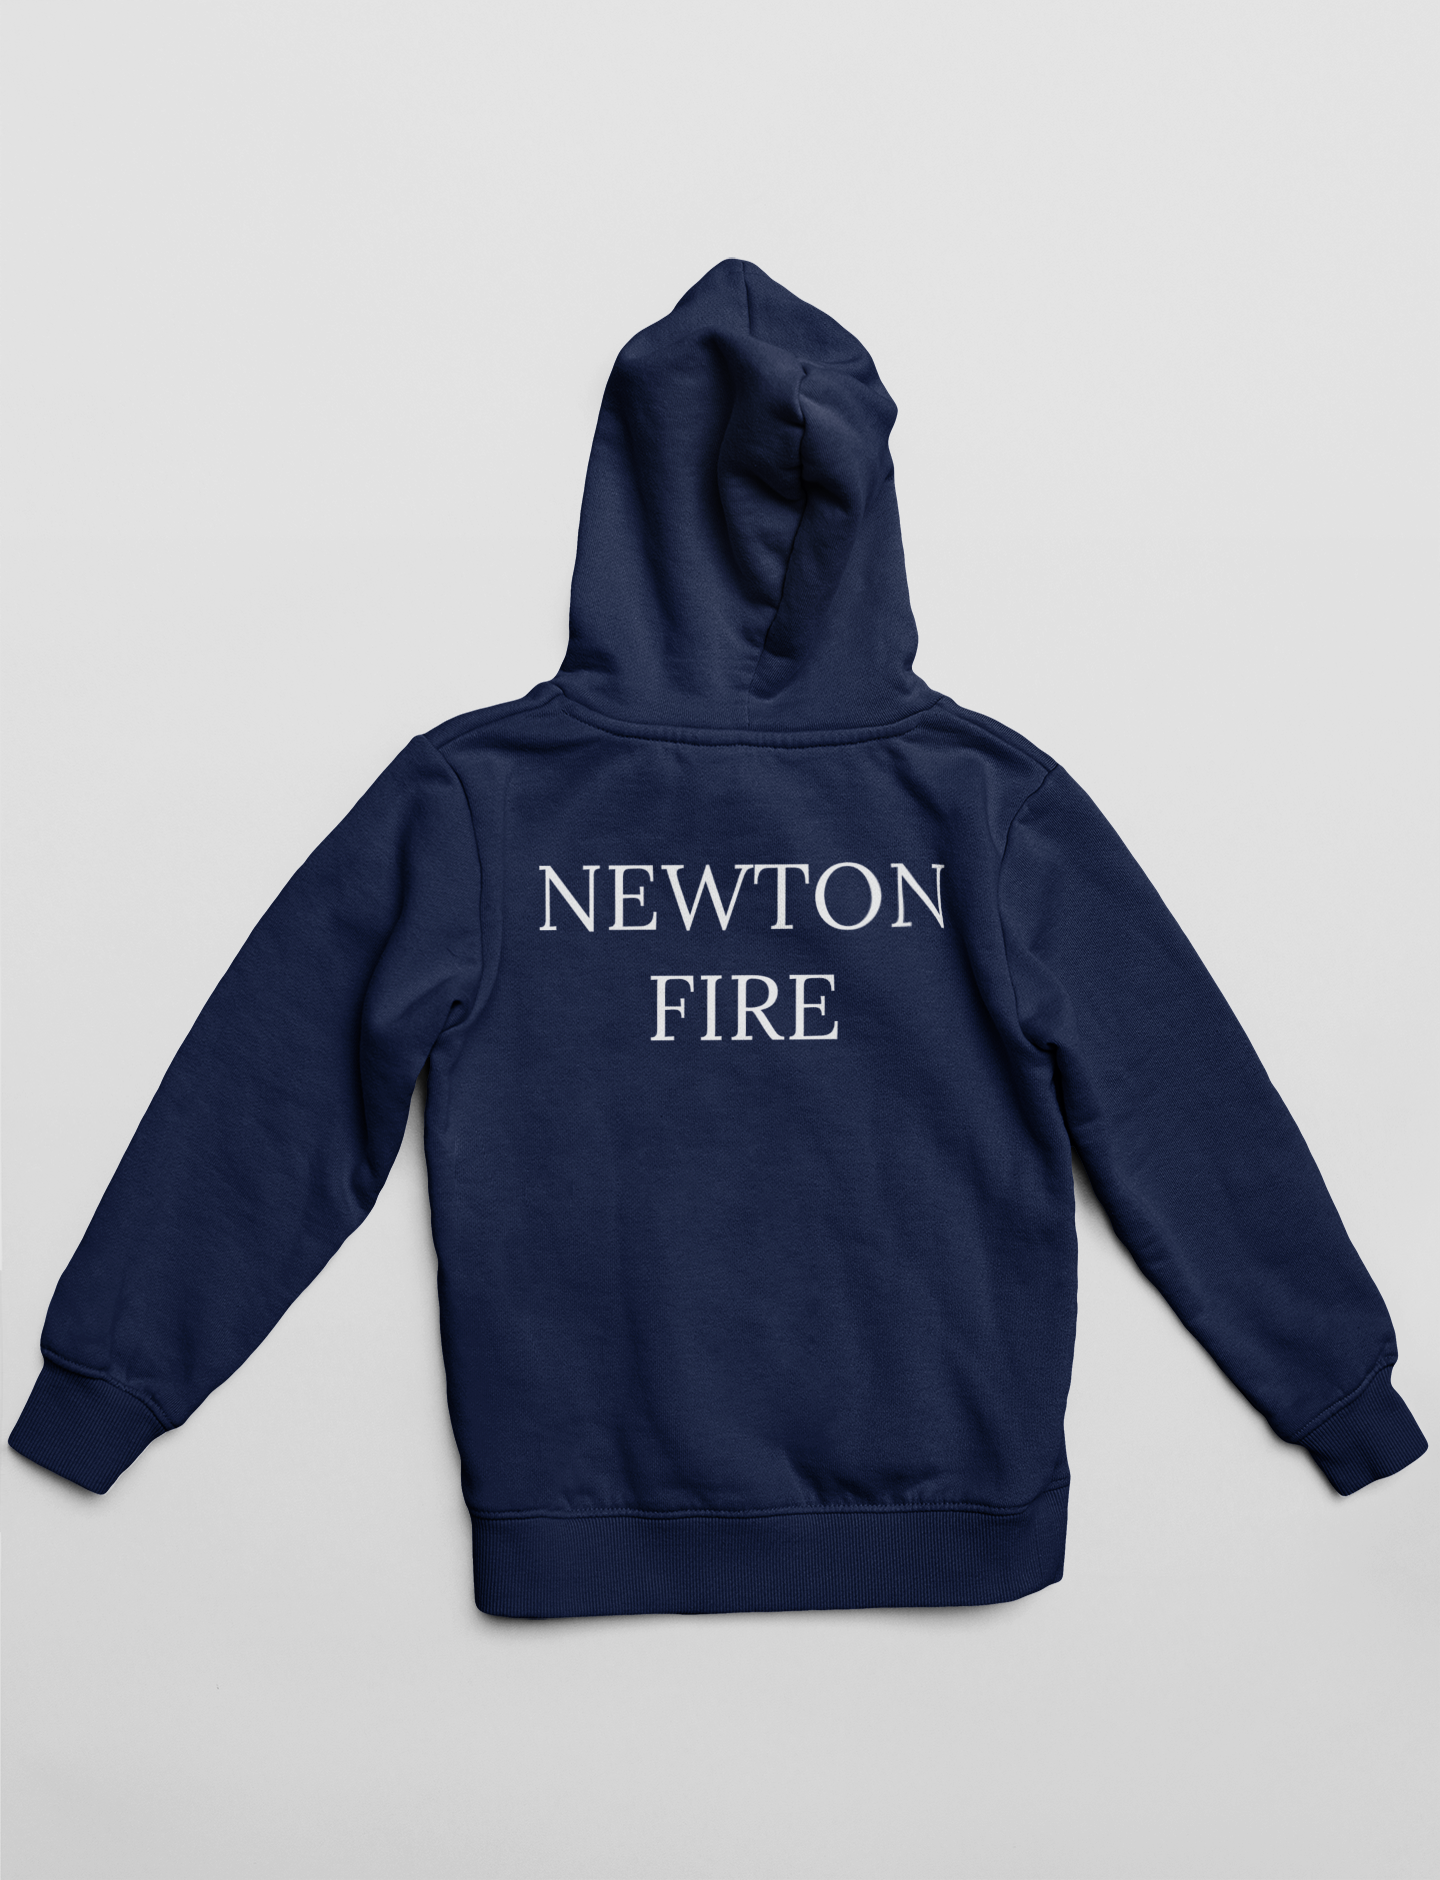 Newton Fire Maltese Cross Full-Zip Hooded Sweatshirt